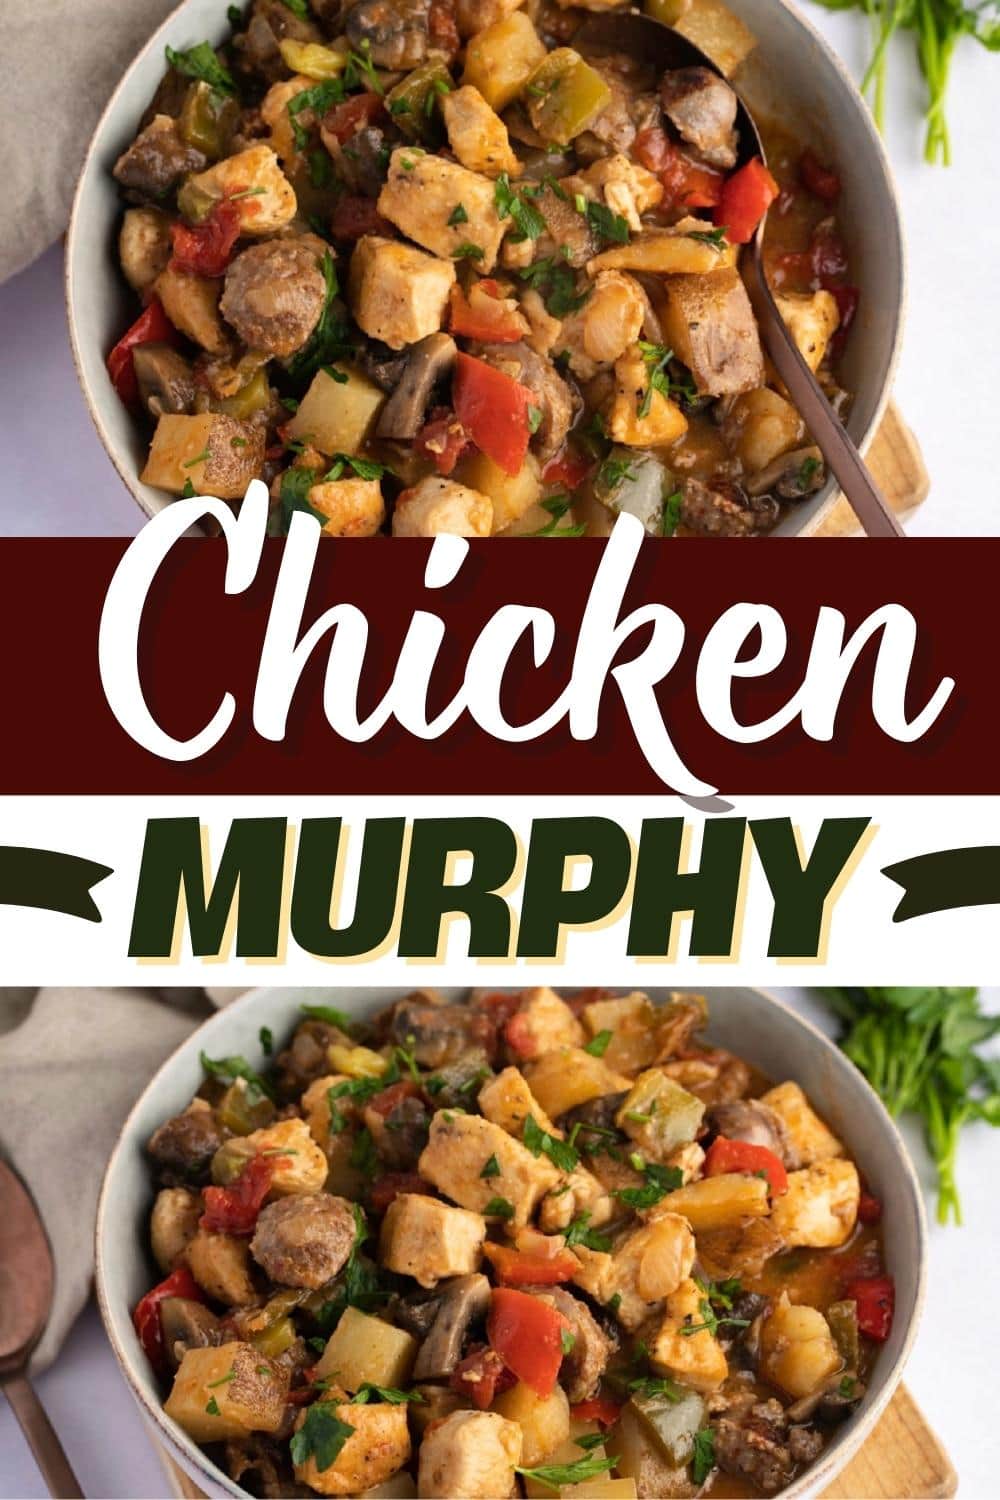 Chicken Murphy